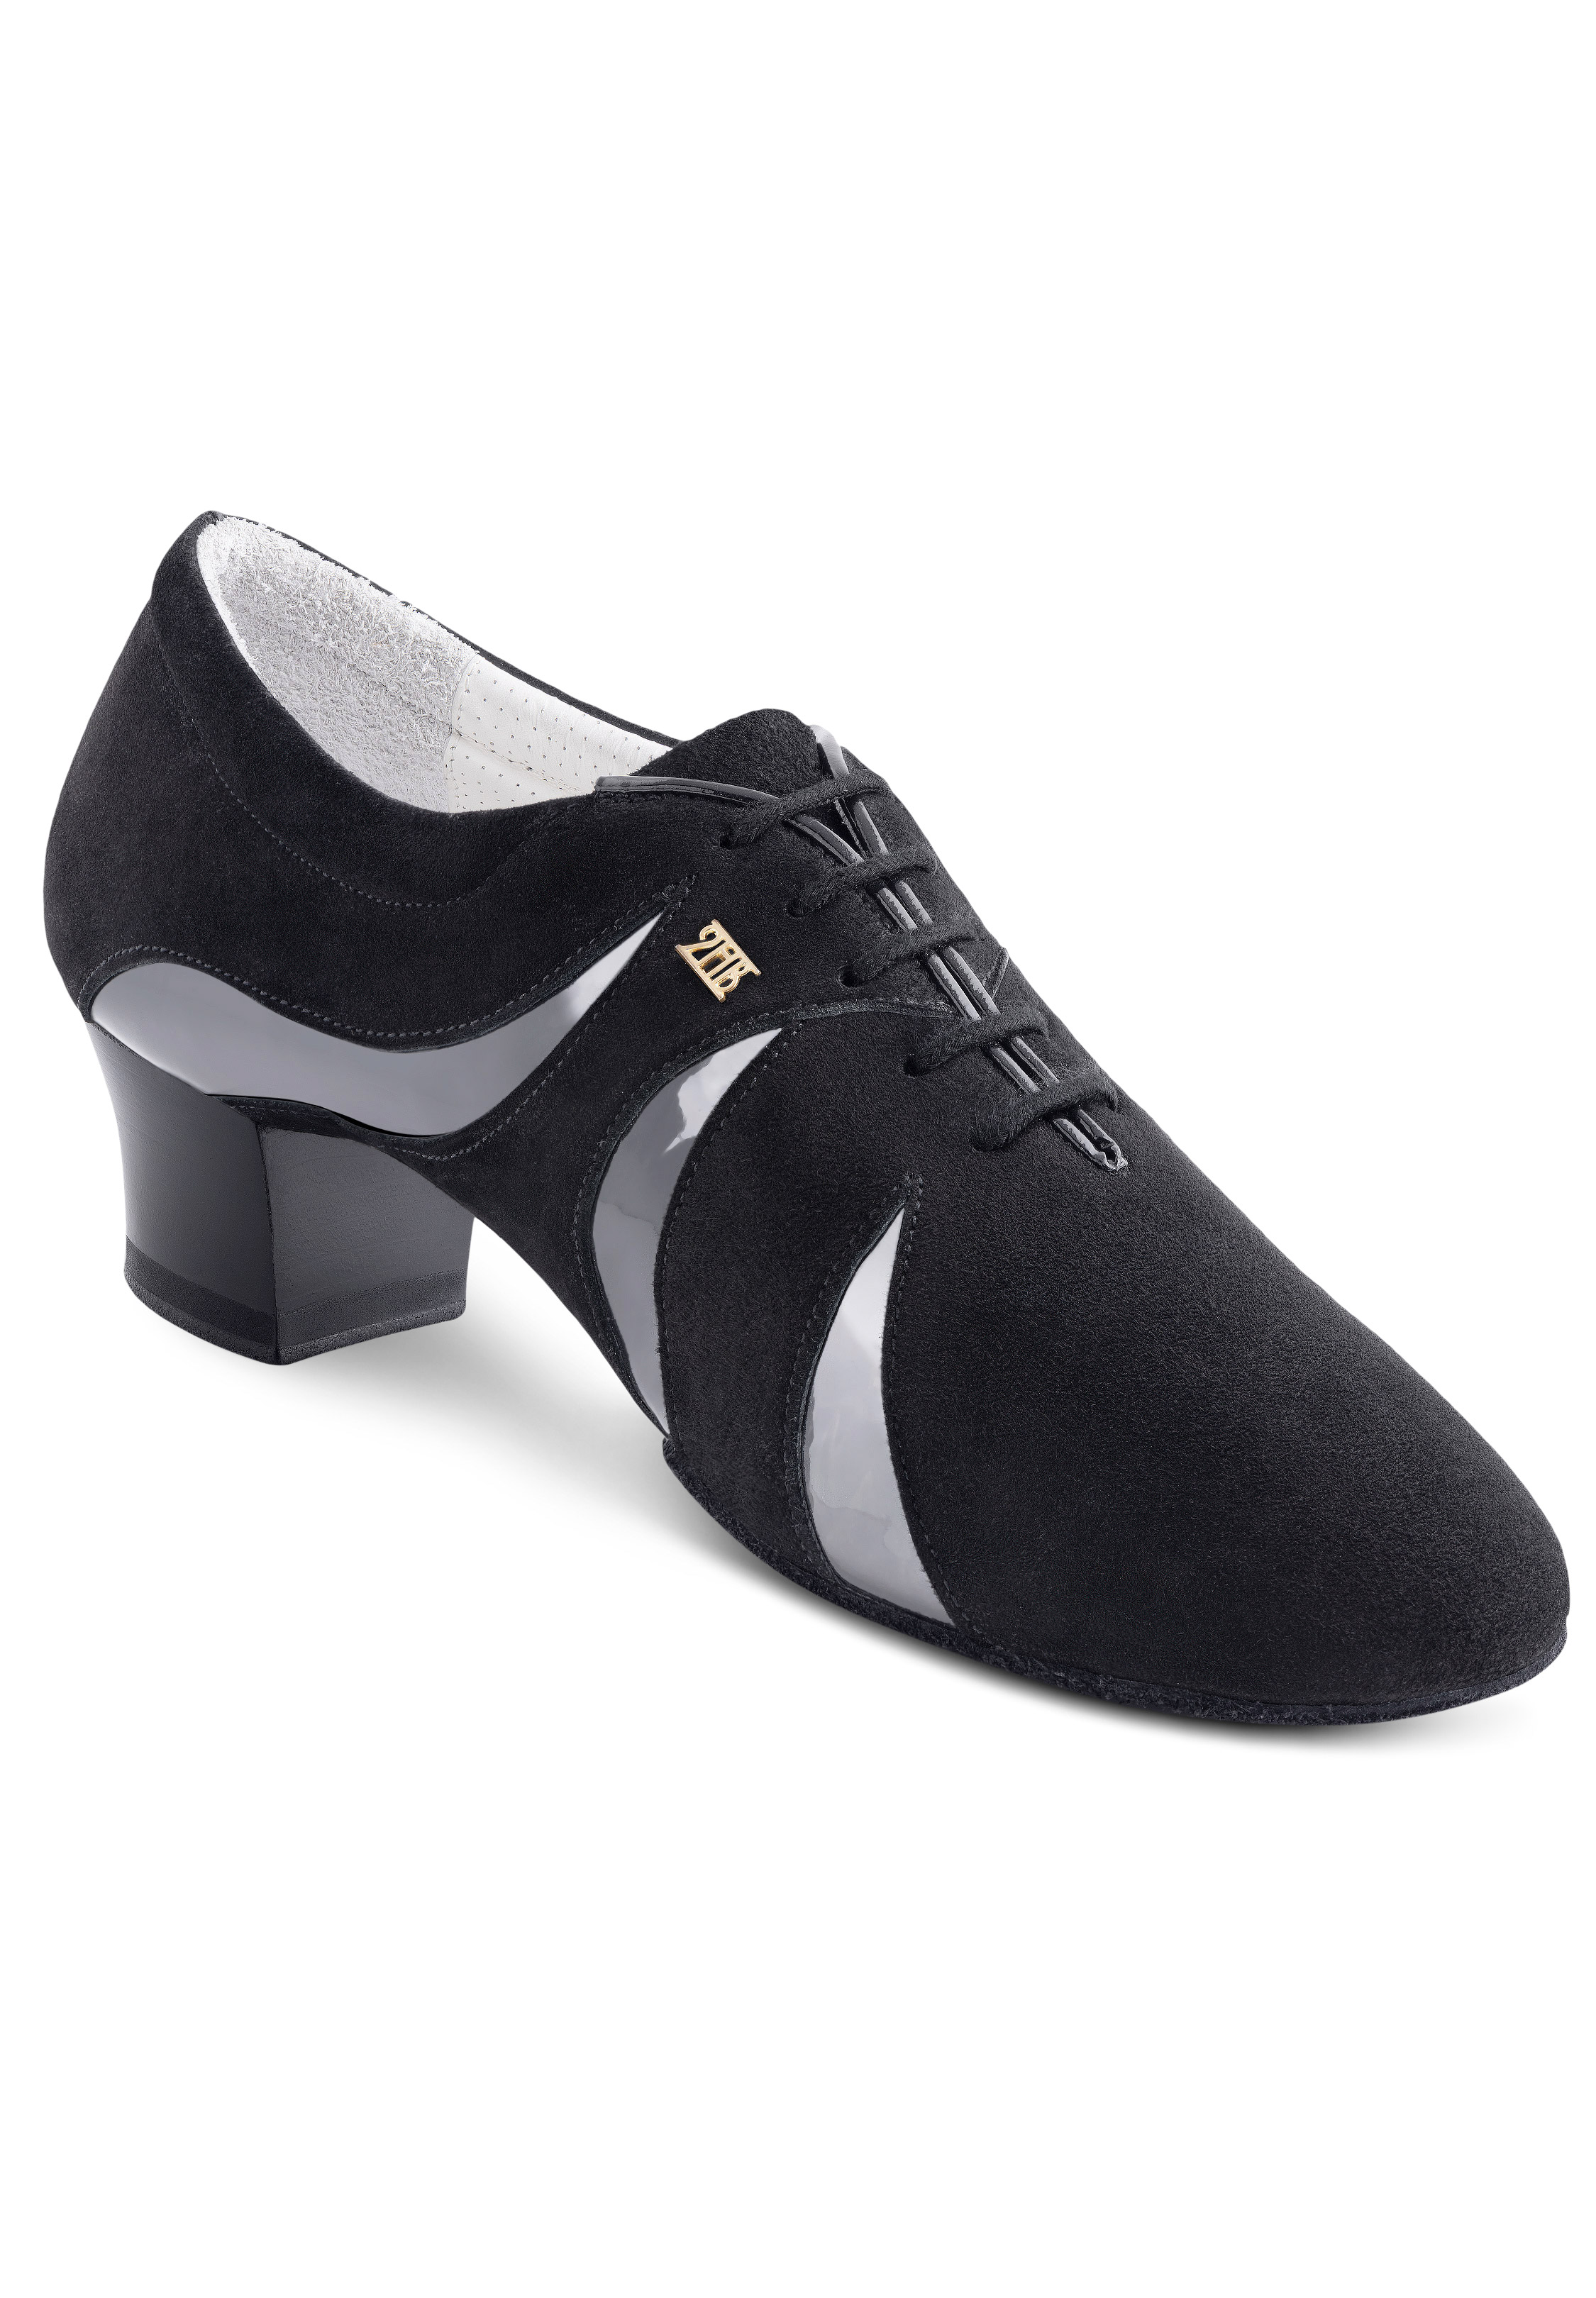 Bundle of 5 Mens Ballroom Latin Salsa Sneaker Dance Shoes Black Suede SERO102BBXEB Comfortable Very Fine 8.5 M US 